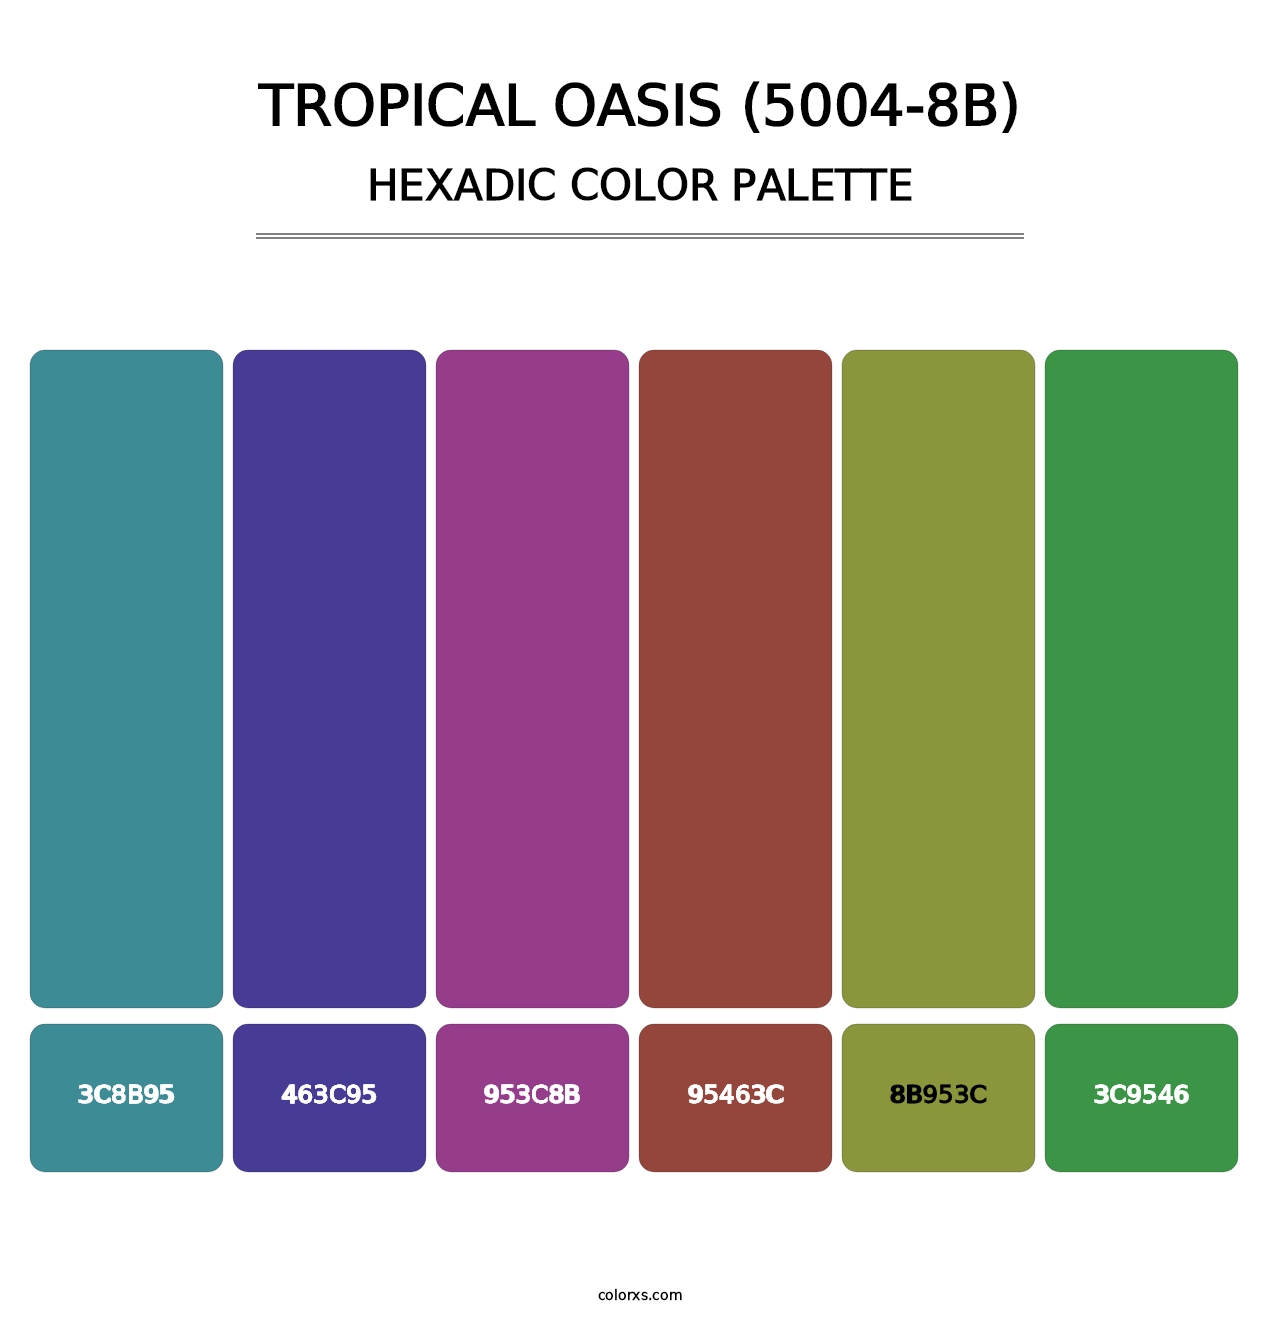 Tropical Oasis (5004-8B) - Hexadic Color Palette